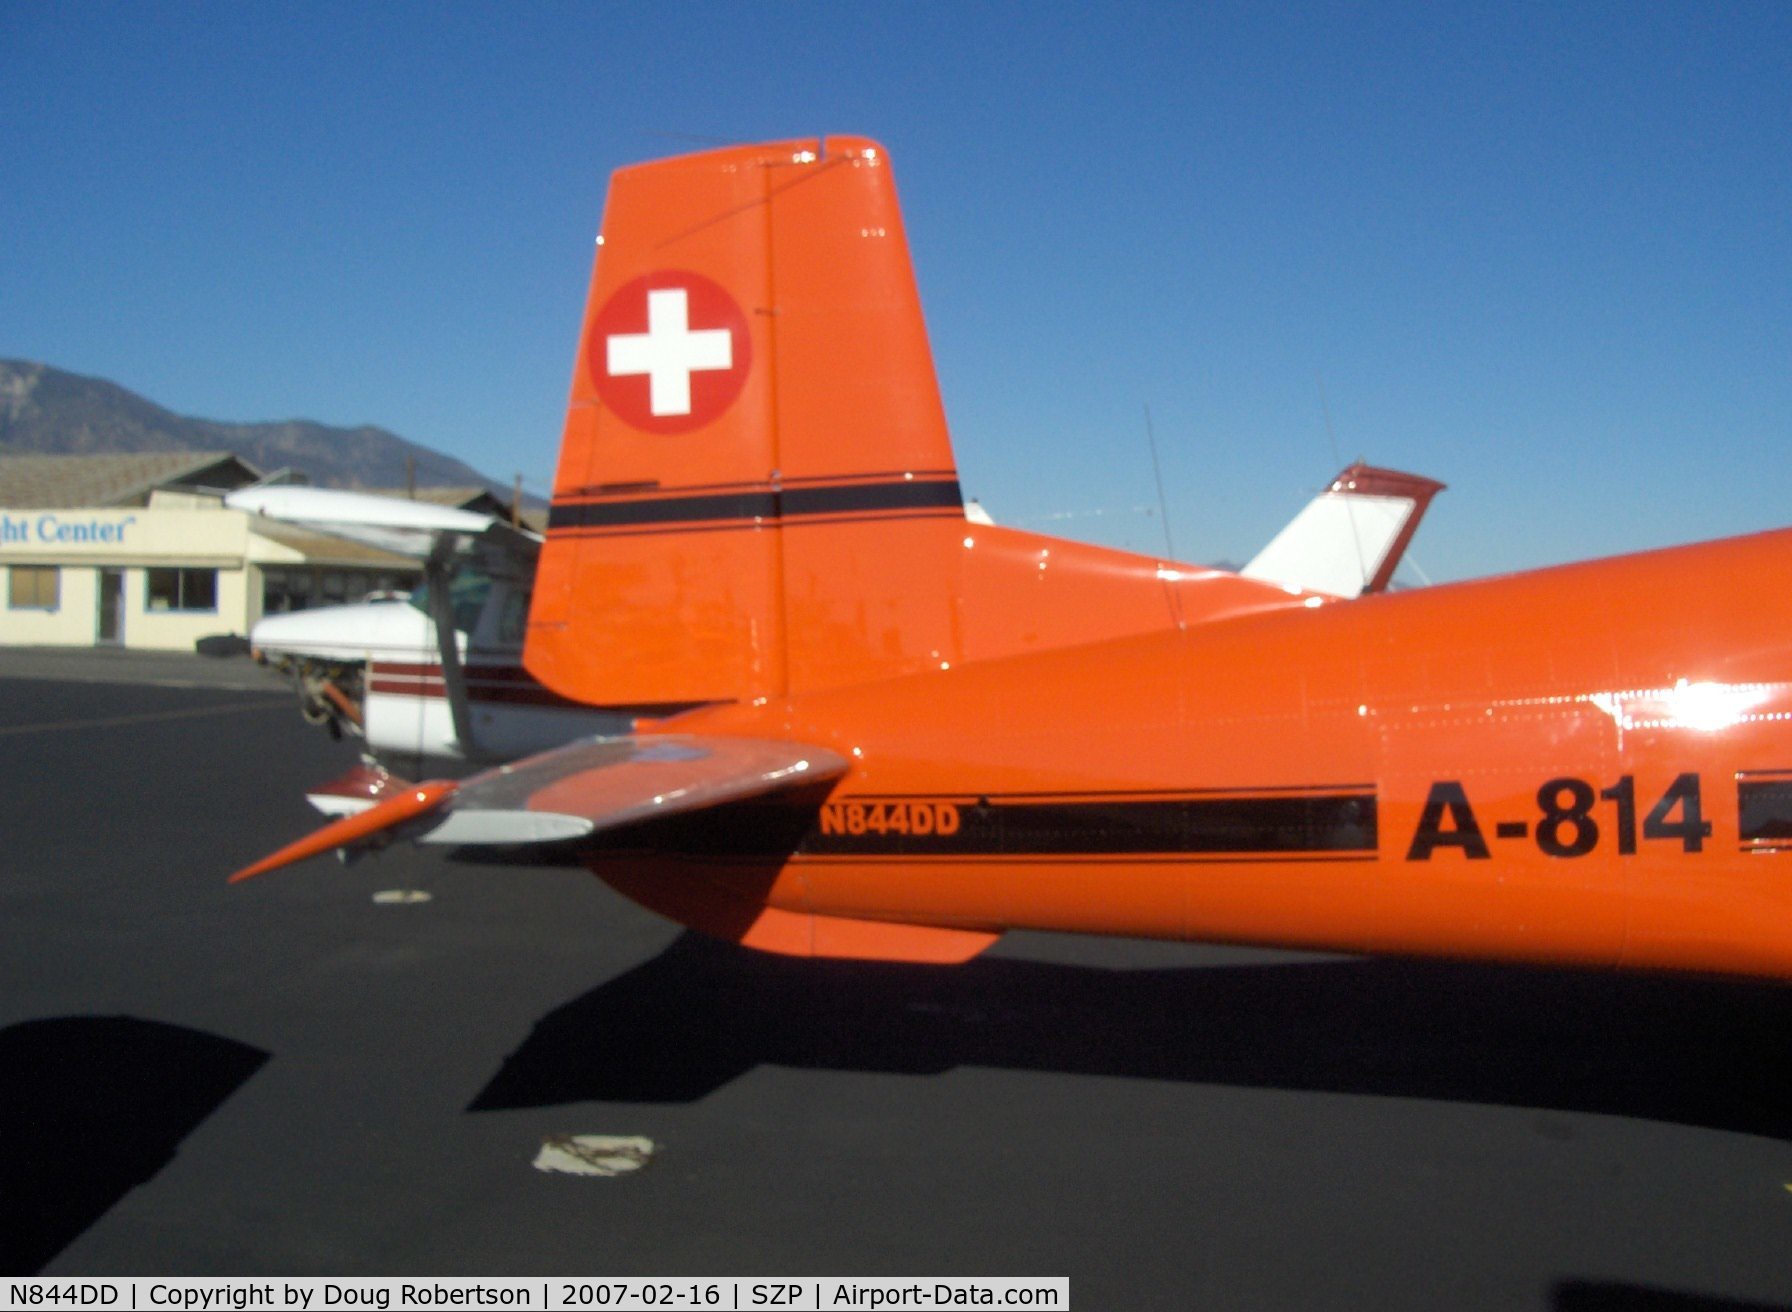 N844DD, 1958 Pilatus P-3 MK II C/N 452-1, Pilatus P.3-05 Swiss Air Force Intermediate Trainer, Lycoming GO-435-C&D 260 Hp, empennage, note ventral fin keel prevents flat spins